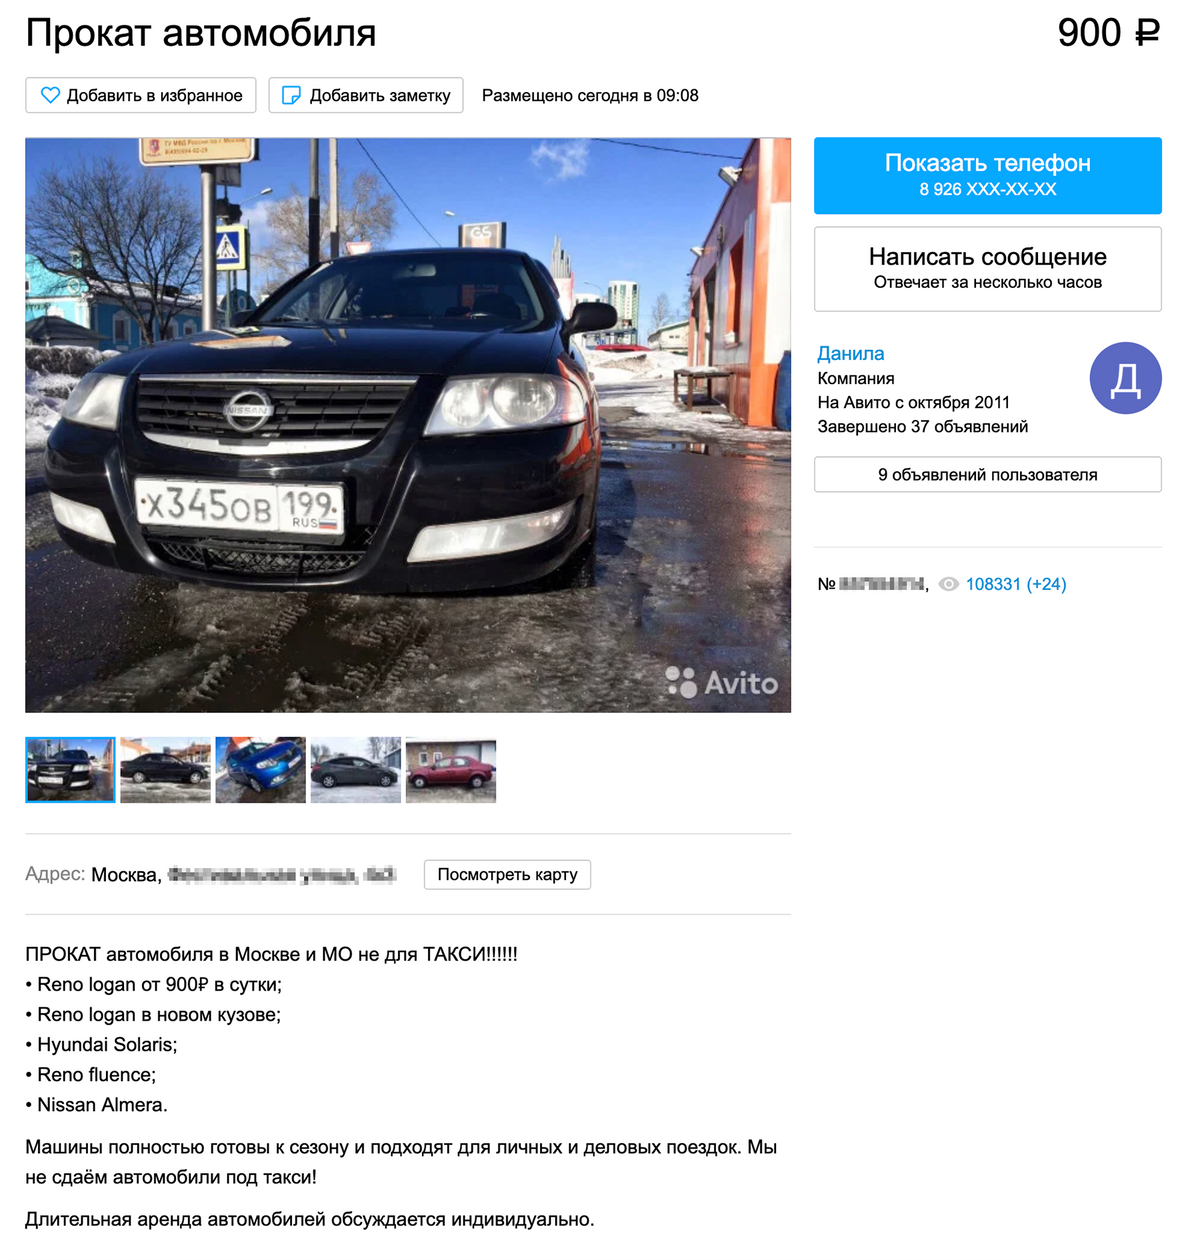 В Москве можно взять машину в аренду по цене от 900 <span class=ruble>Р</span> в сутки, но средняя цена на «Авито», как показывает поиск, — от 1200 <span class=ruble>Р</span>